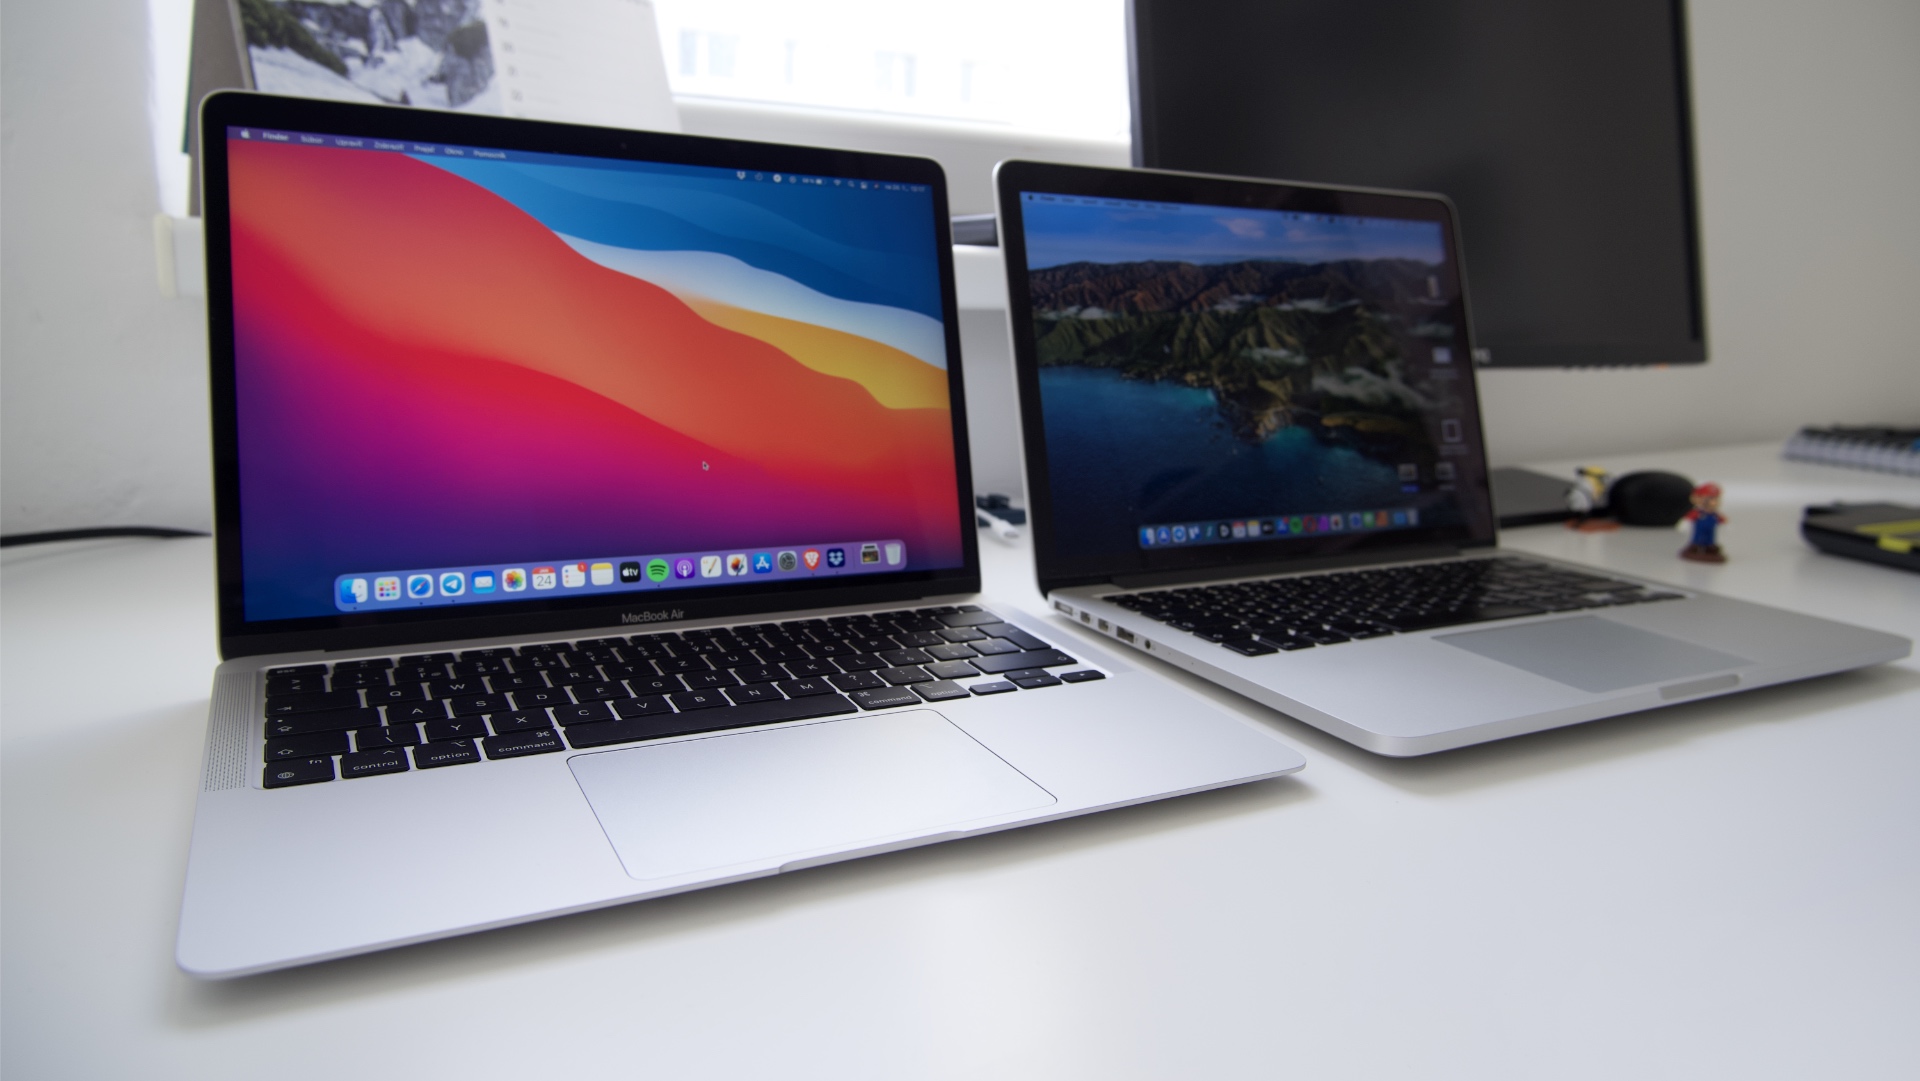 M1 MacBook Air vs MacBook Pro (Late 2013) comparison - Reconnectly